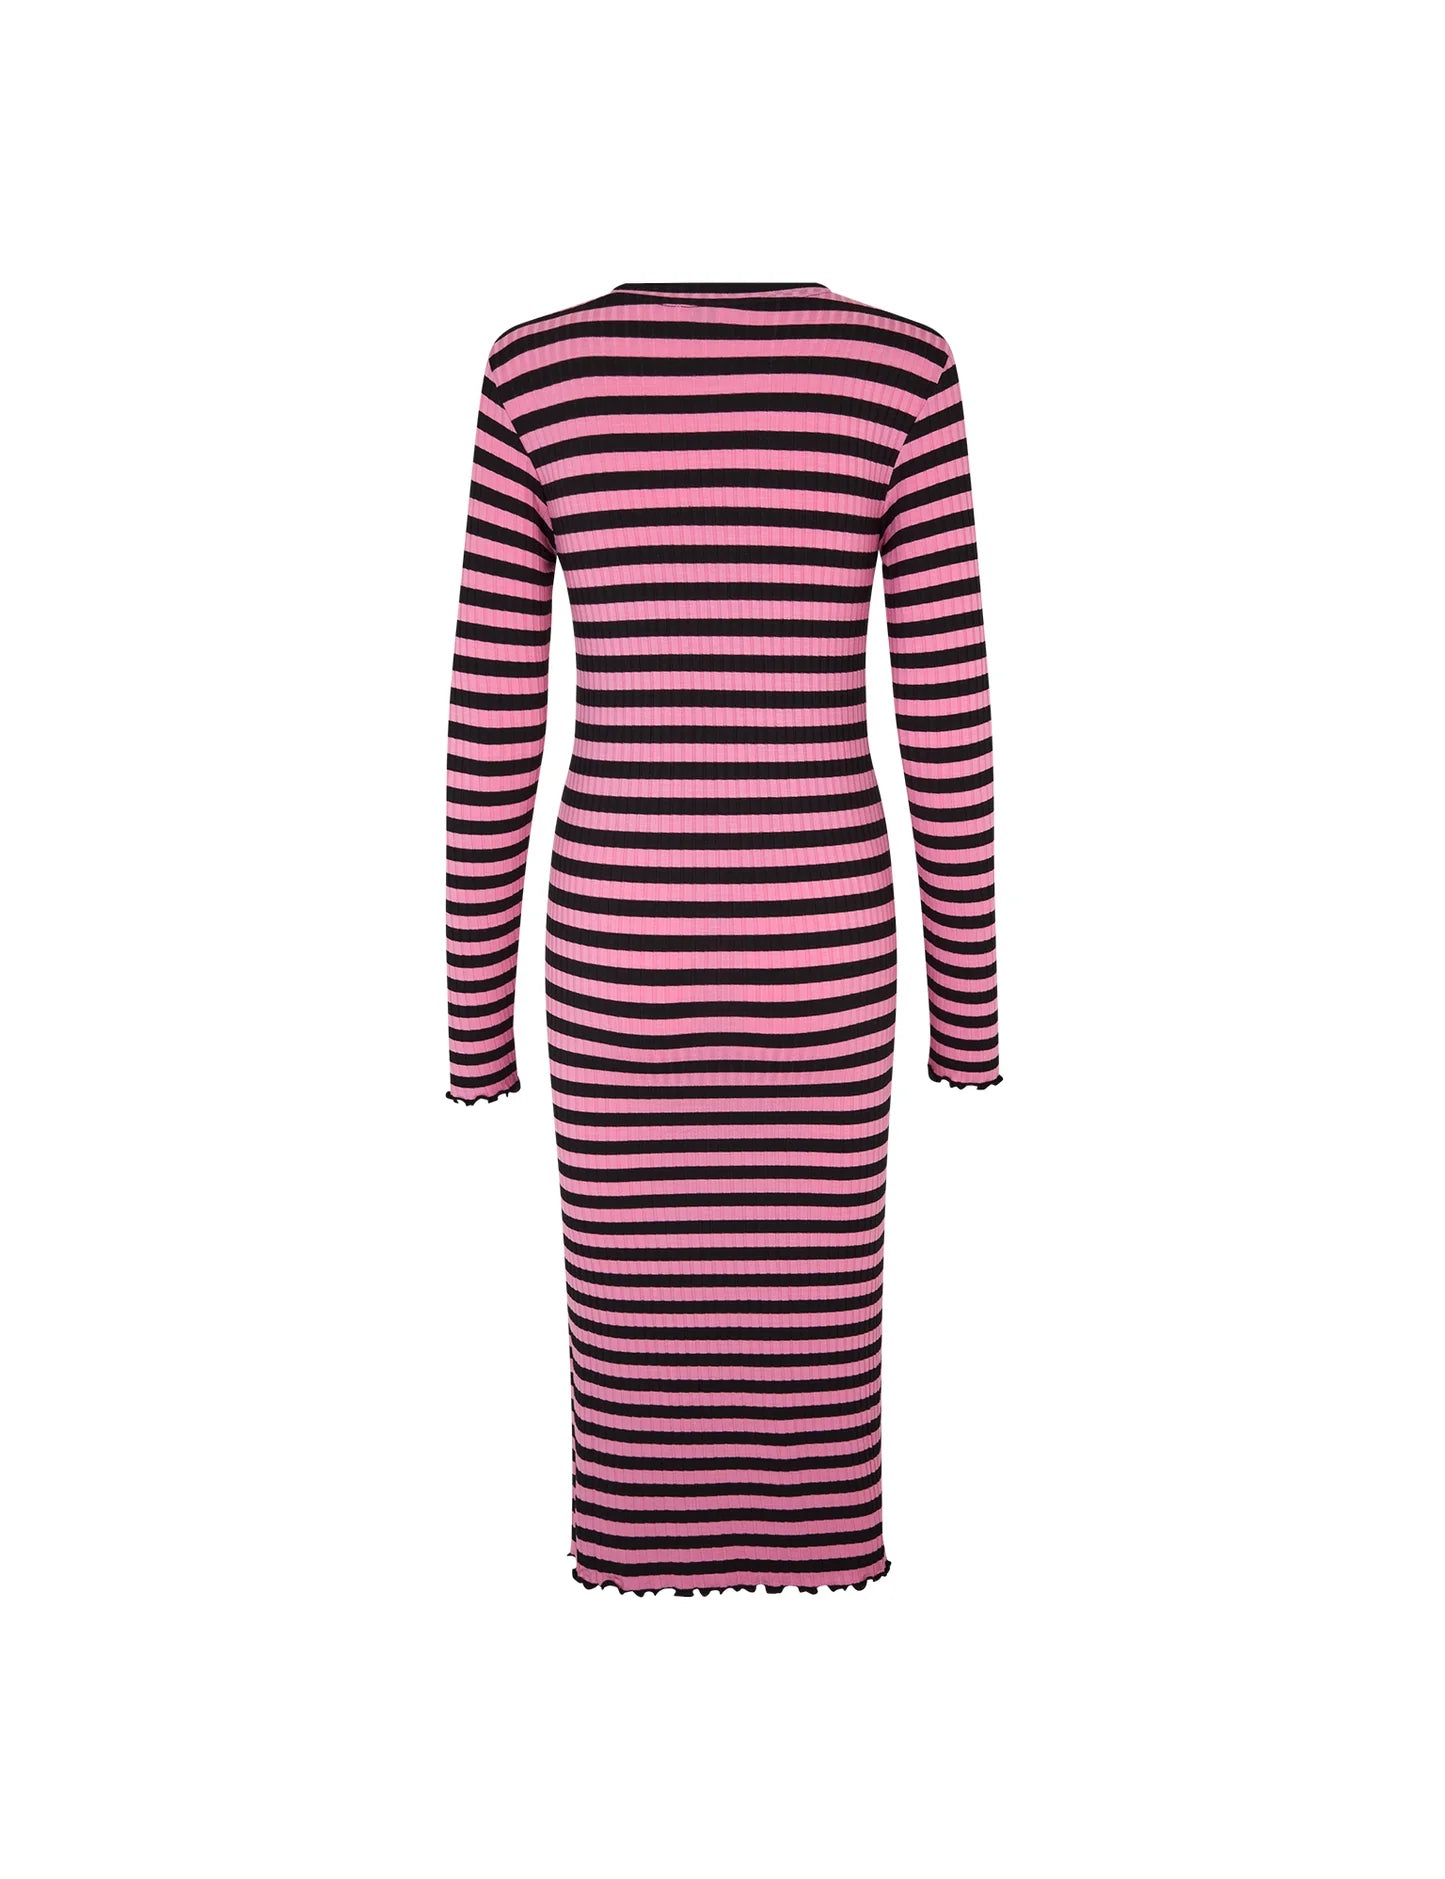 Mads Nørgaard 5x5 Stripe Boa Dress